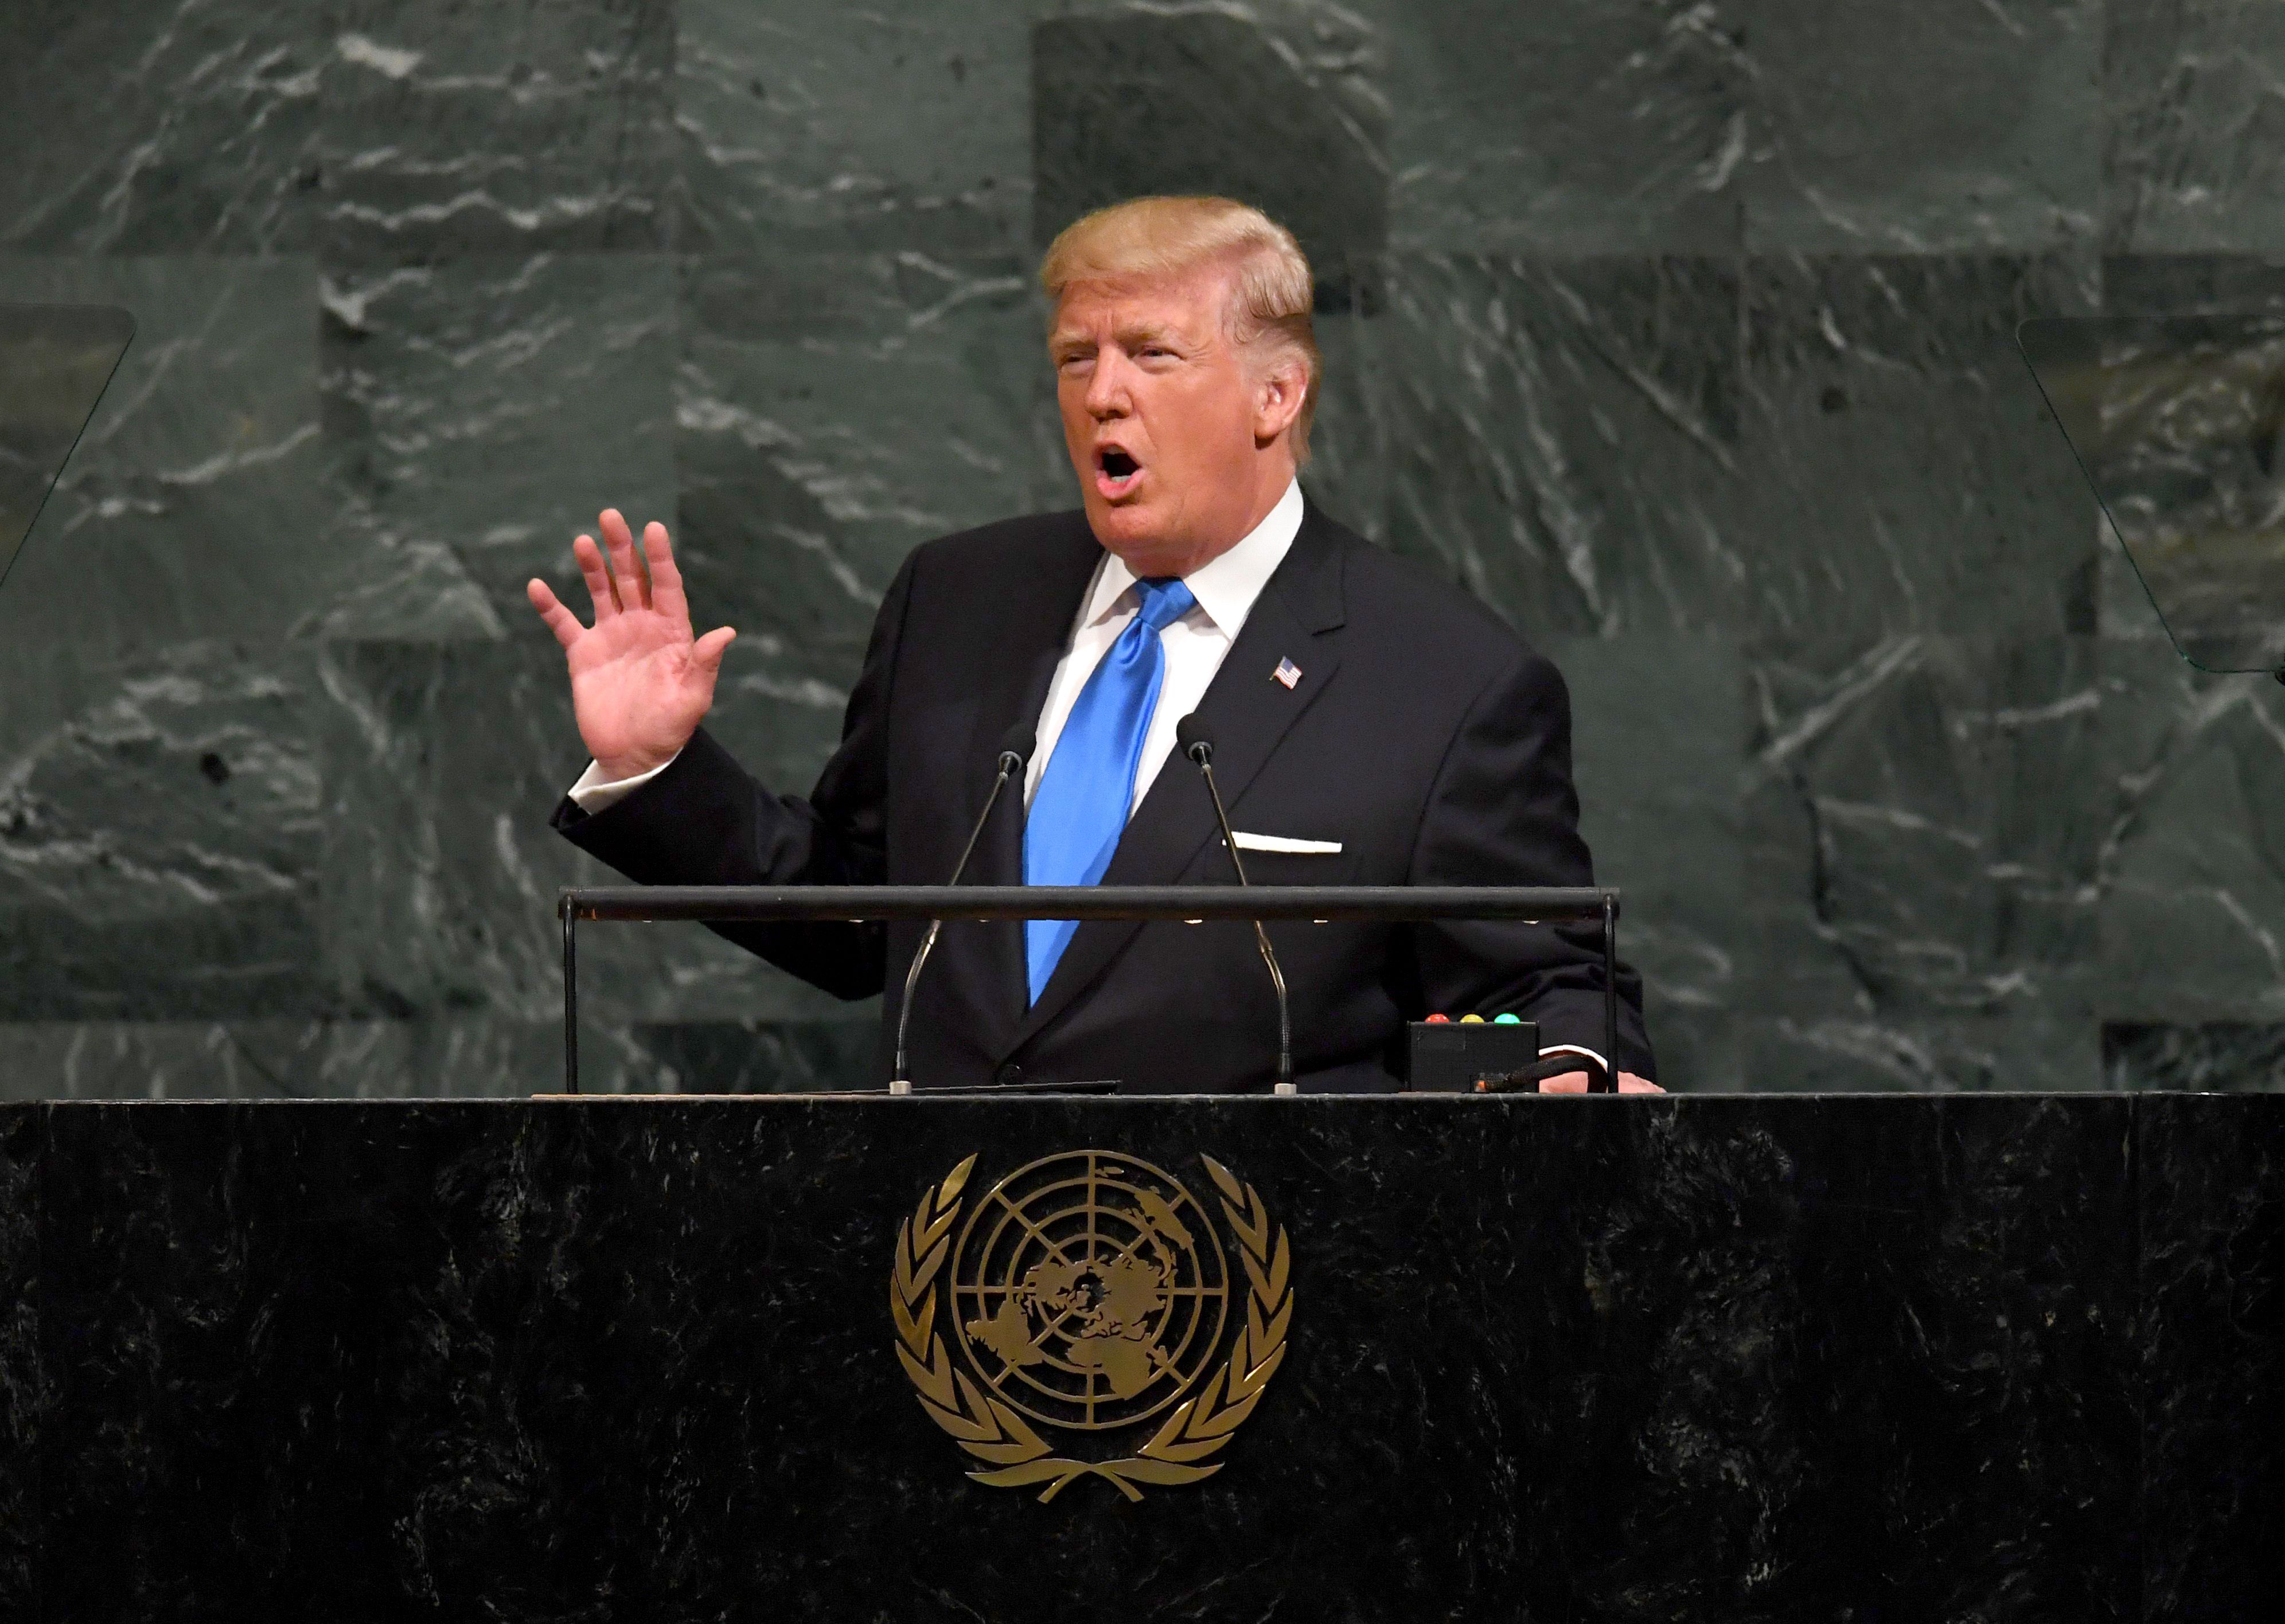 President Trump Threatens To 'Totally Destroy' North Korea In U.N. Speech
